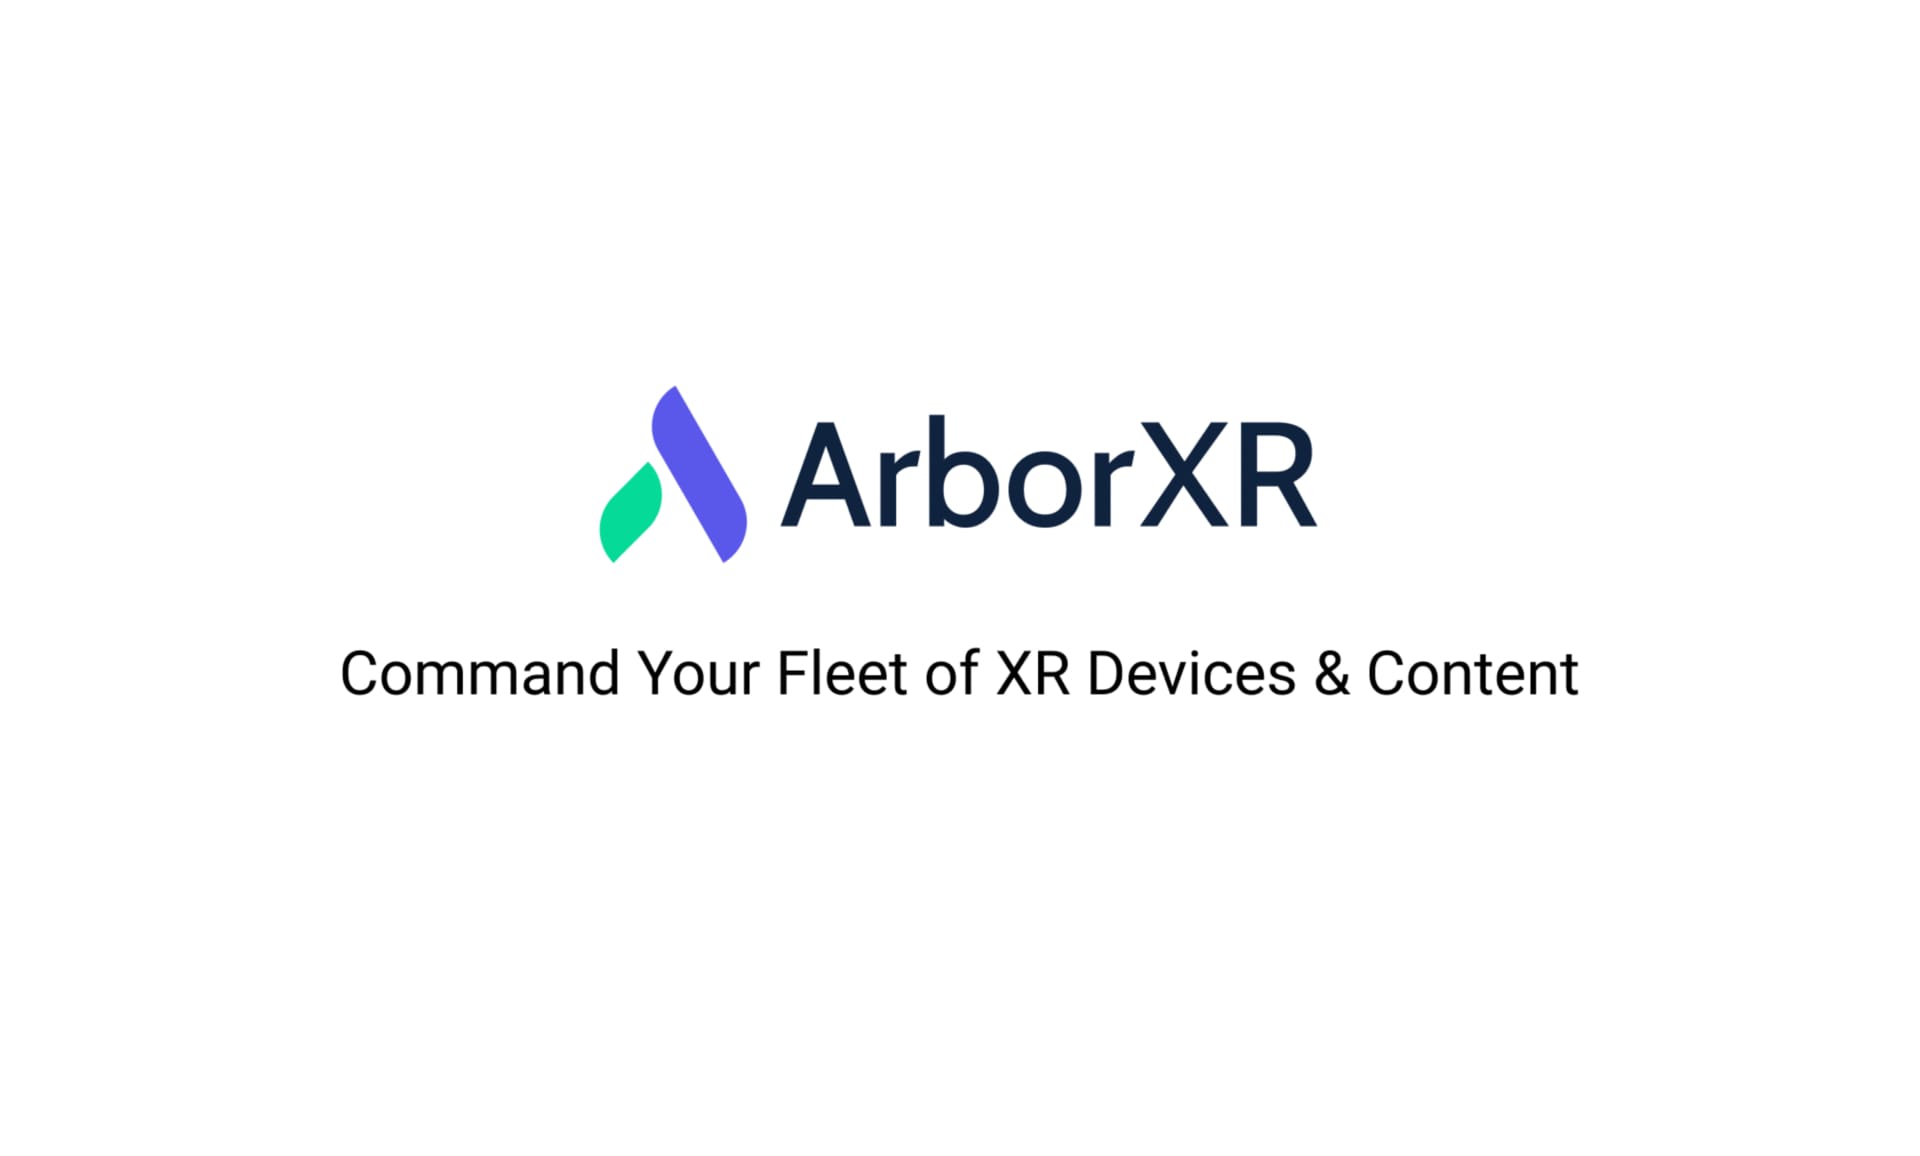 ArborXR Device Management Subscription-1 Year-Starter Plan